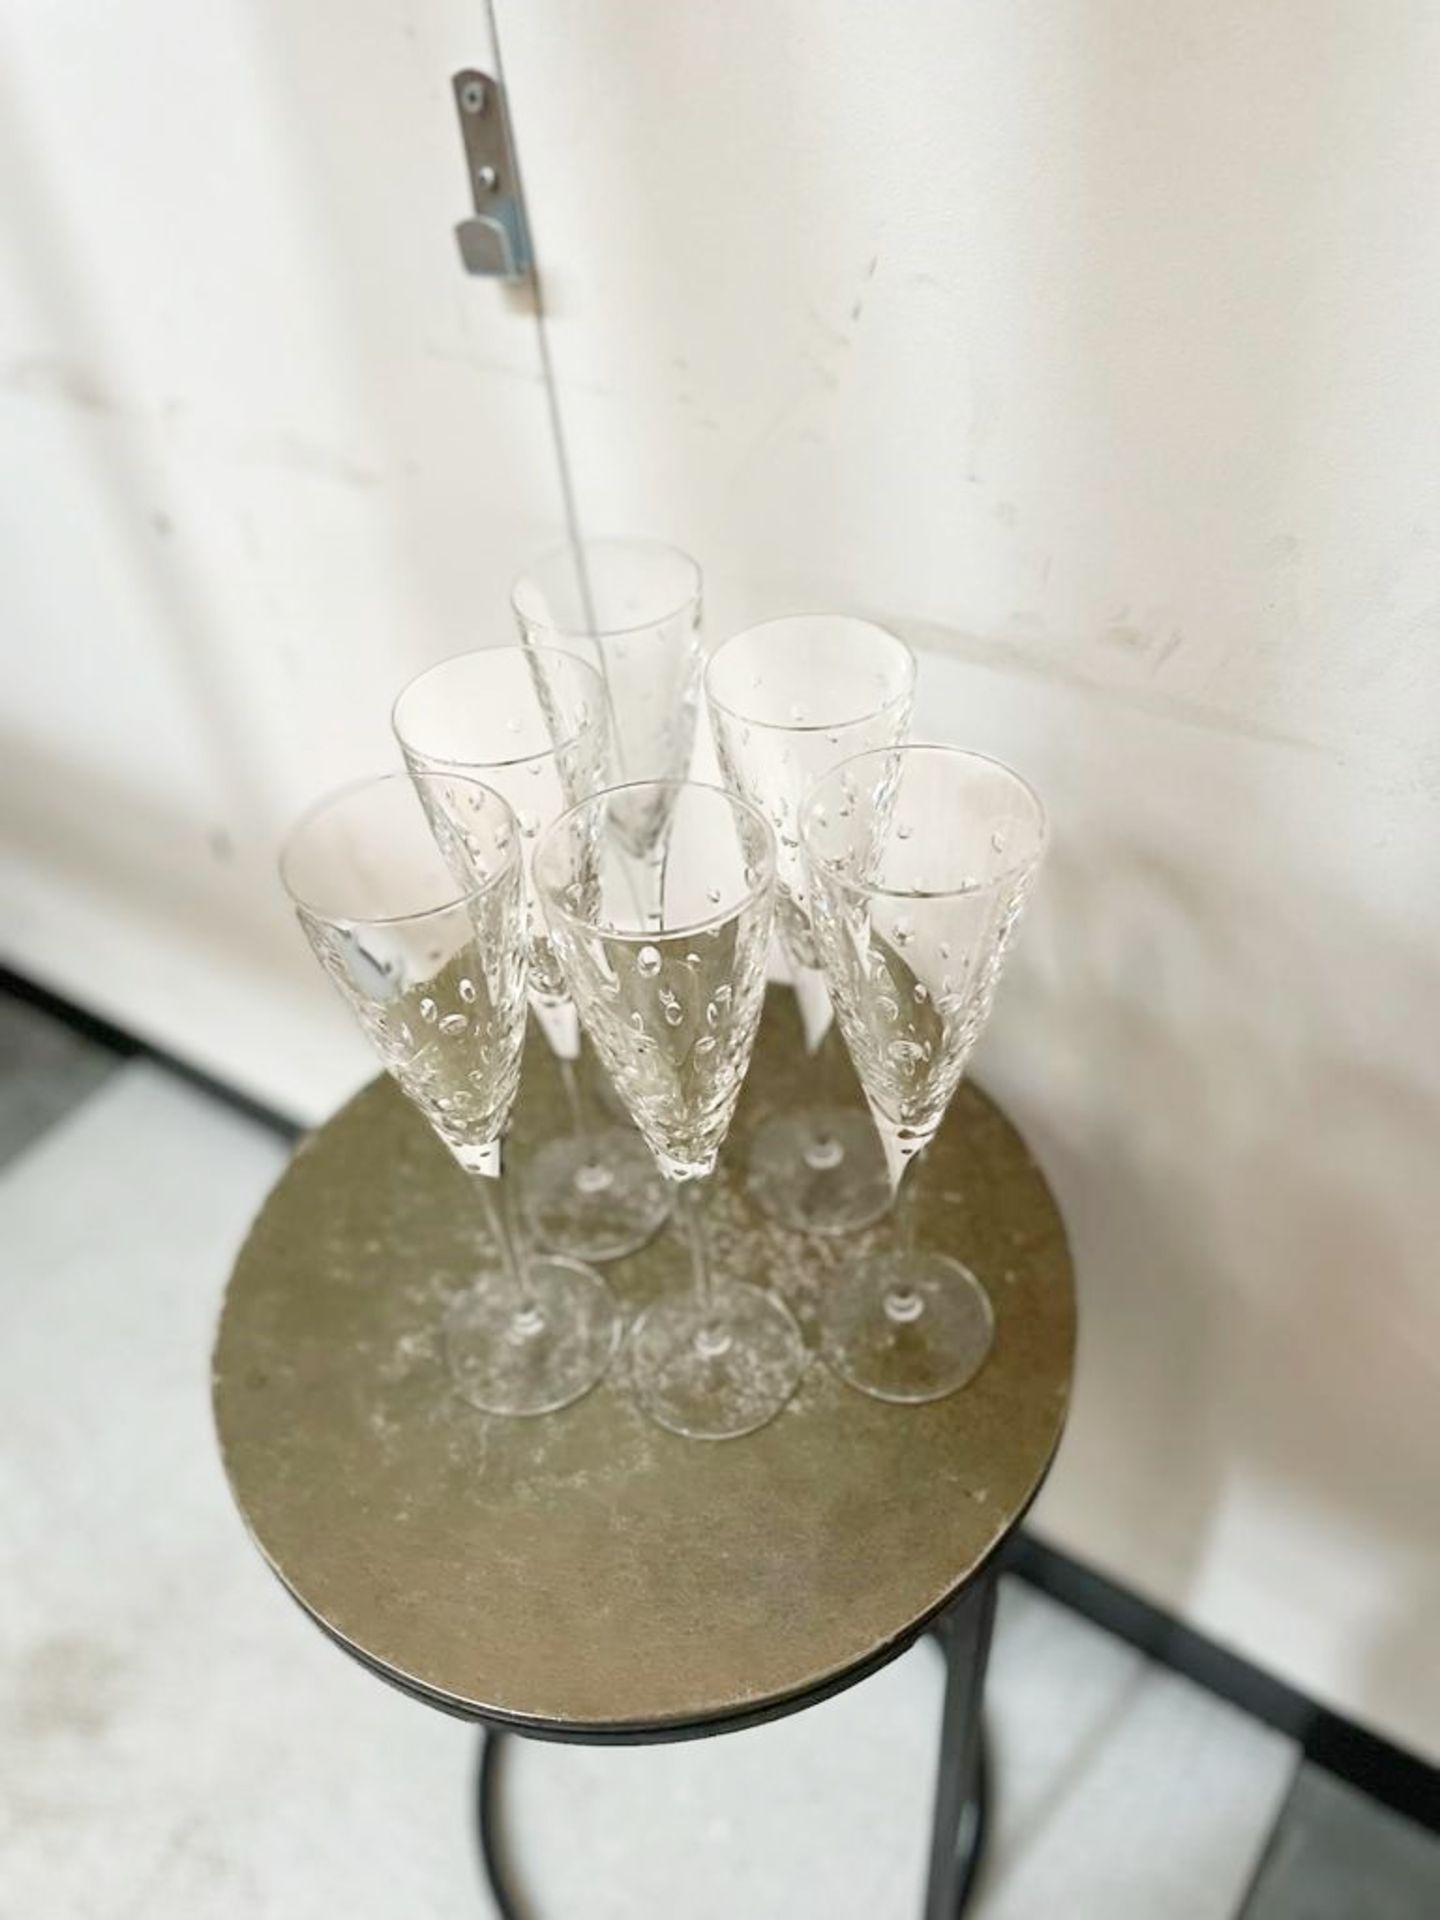 5 x Cristal Dural Champagne Flutes  - Ref: AUR151 - CL652 - Location: Altrincham WA14 - Image 3 of 3